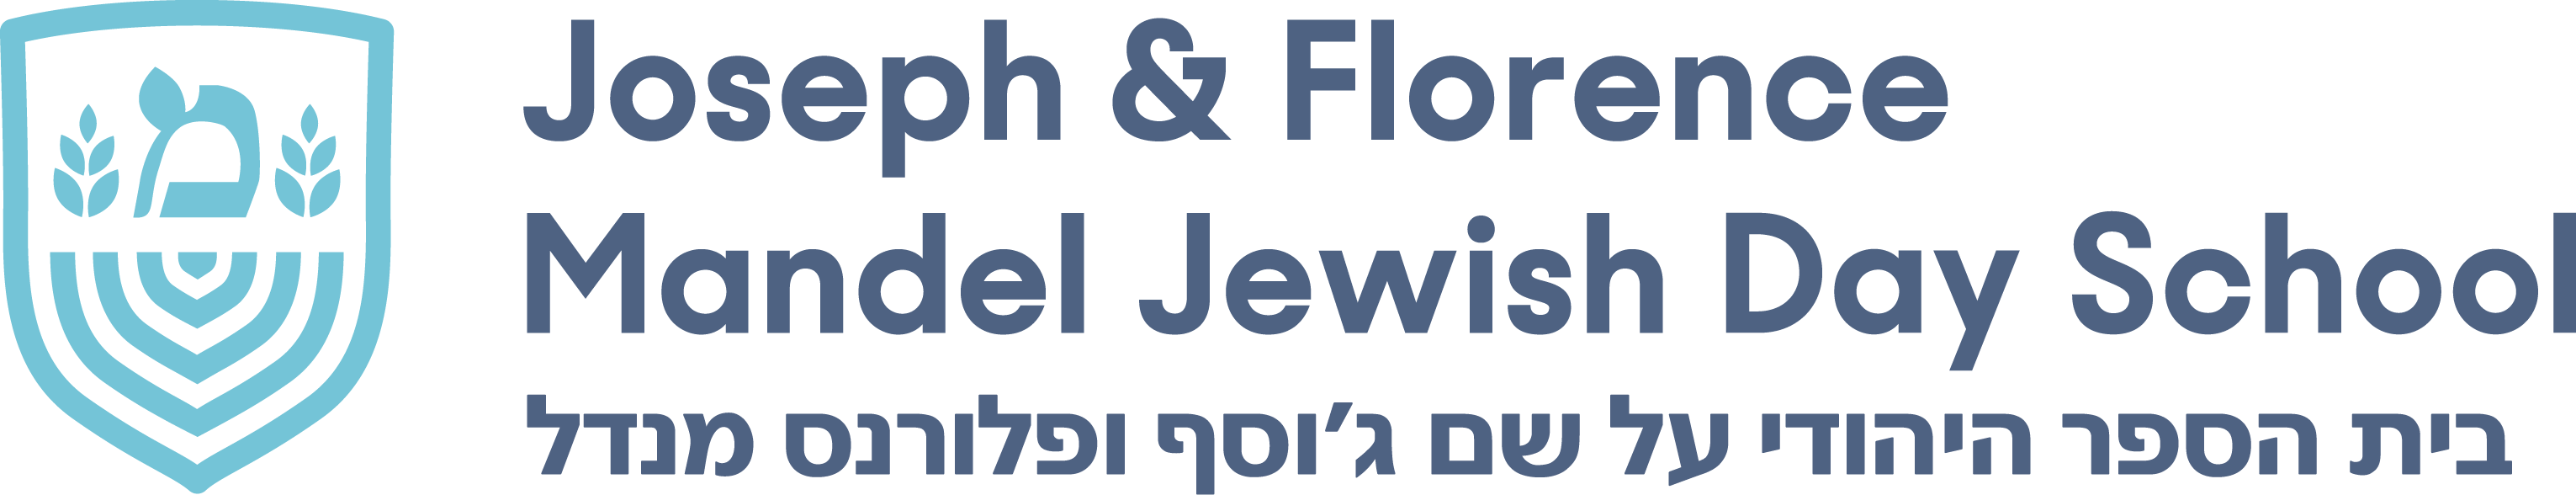 Mandel Jewish Day School New Logo